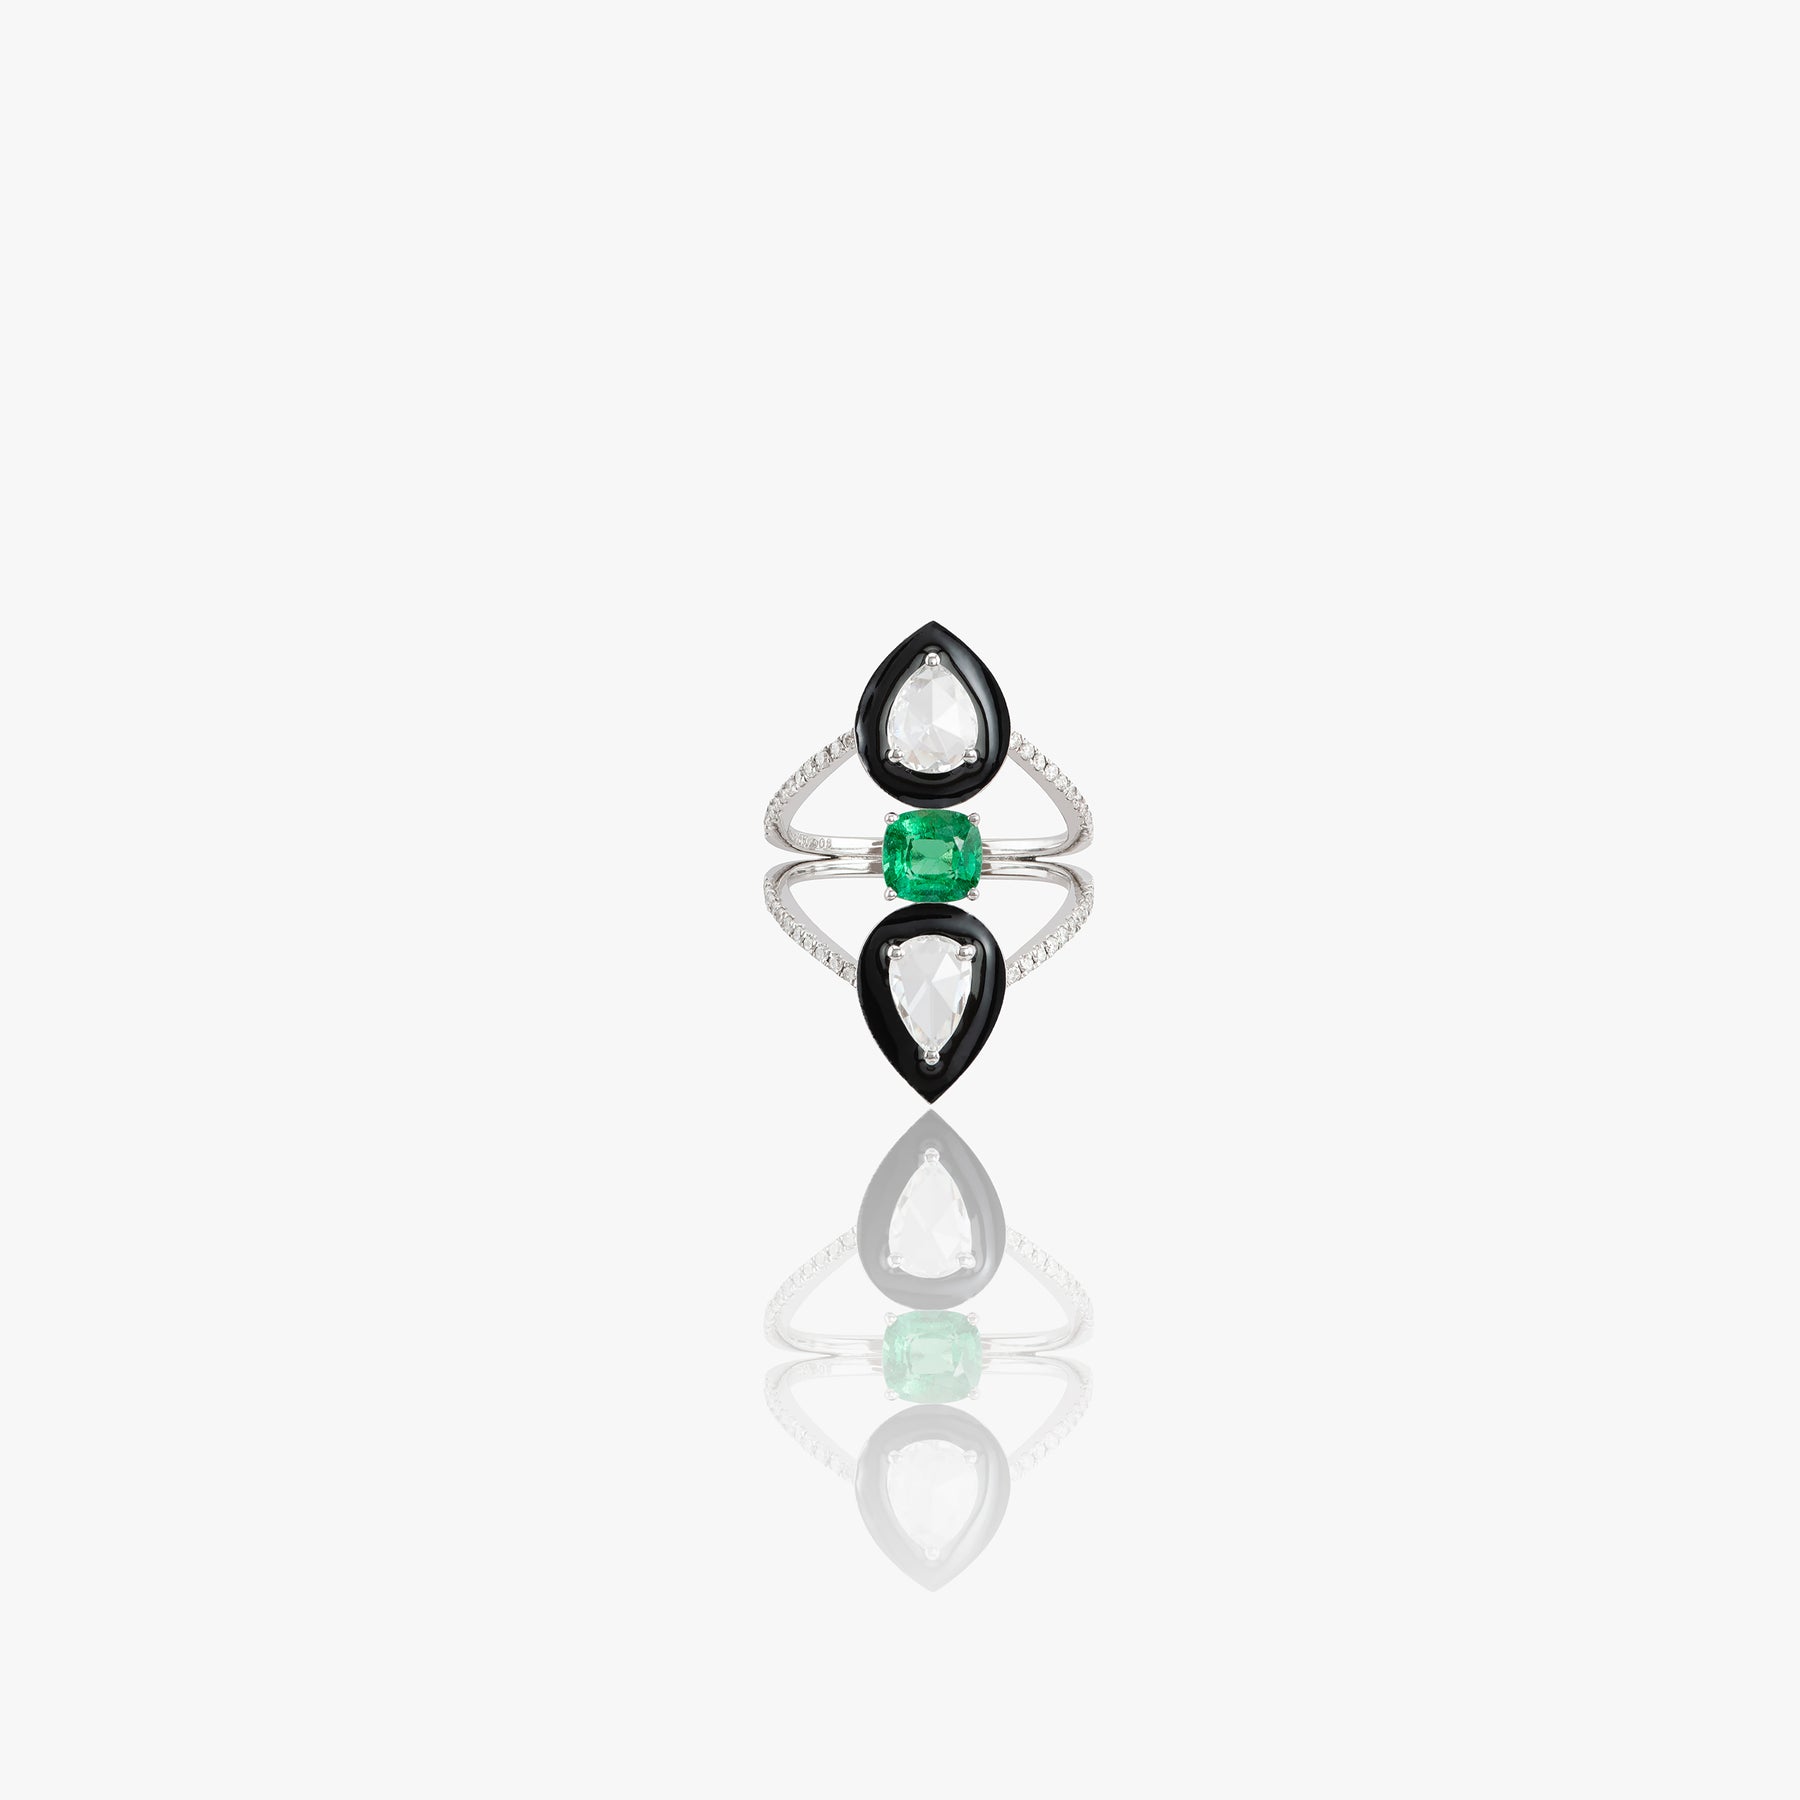 1 Ct to 3 Carat Black Diamond Engagement Ring with Emerald Gemstone Accents  in 925 Silver. Great Shine & Beautiful Design! | ZeeDiamonds